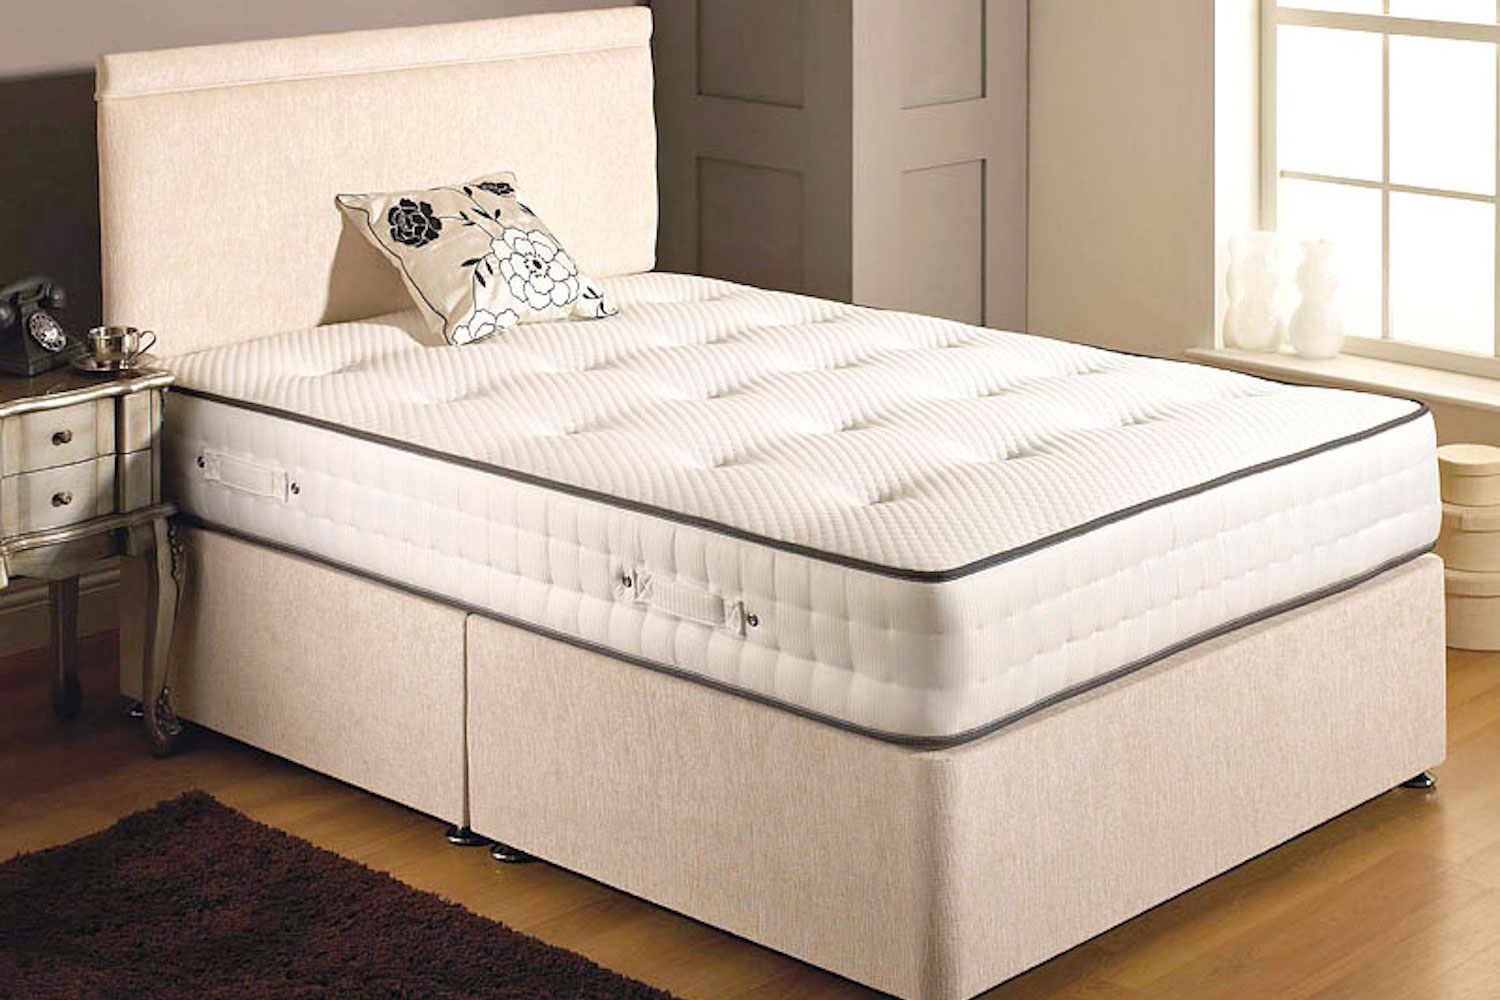 Superior Comfort Memory Foam And Spring Divan Bed -Single-2 Drawers Same Side